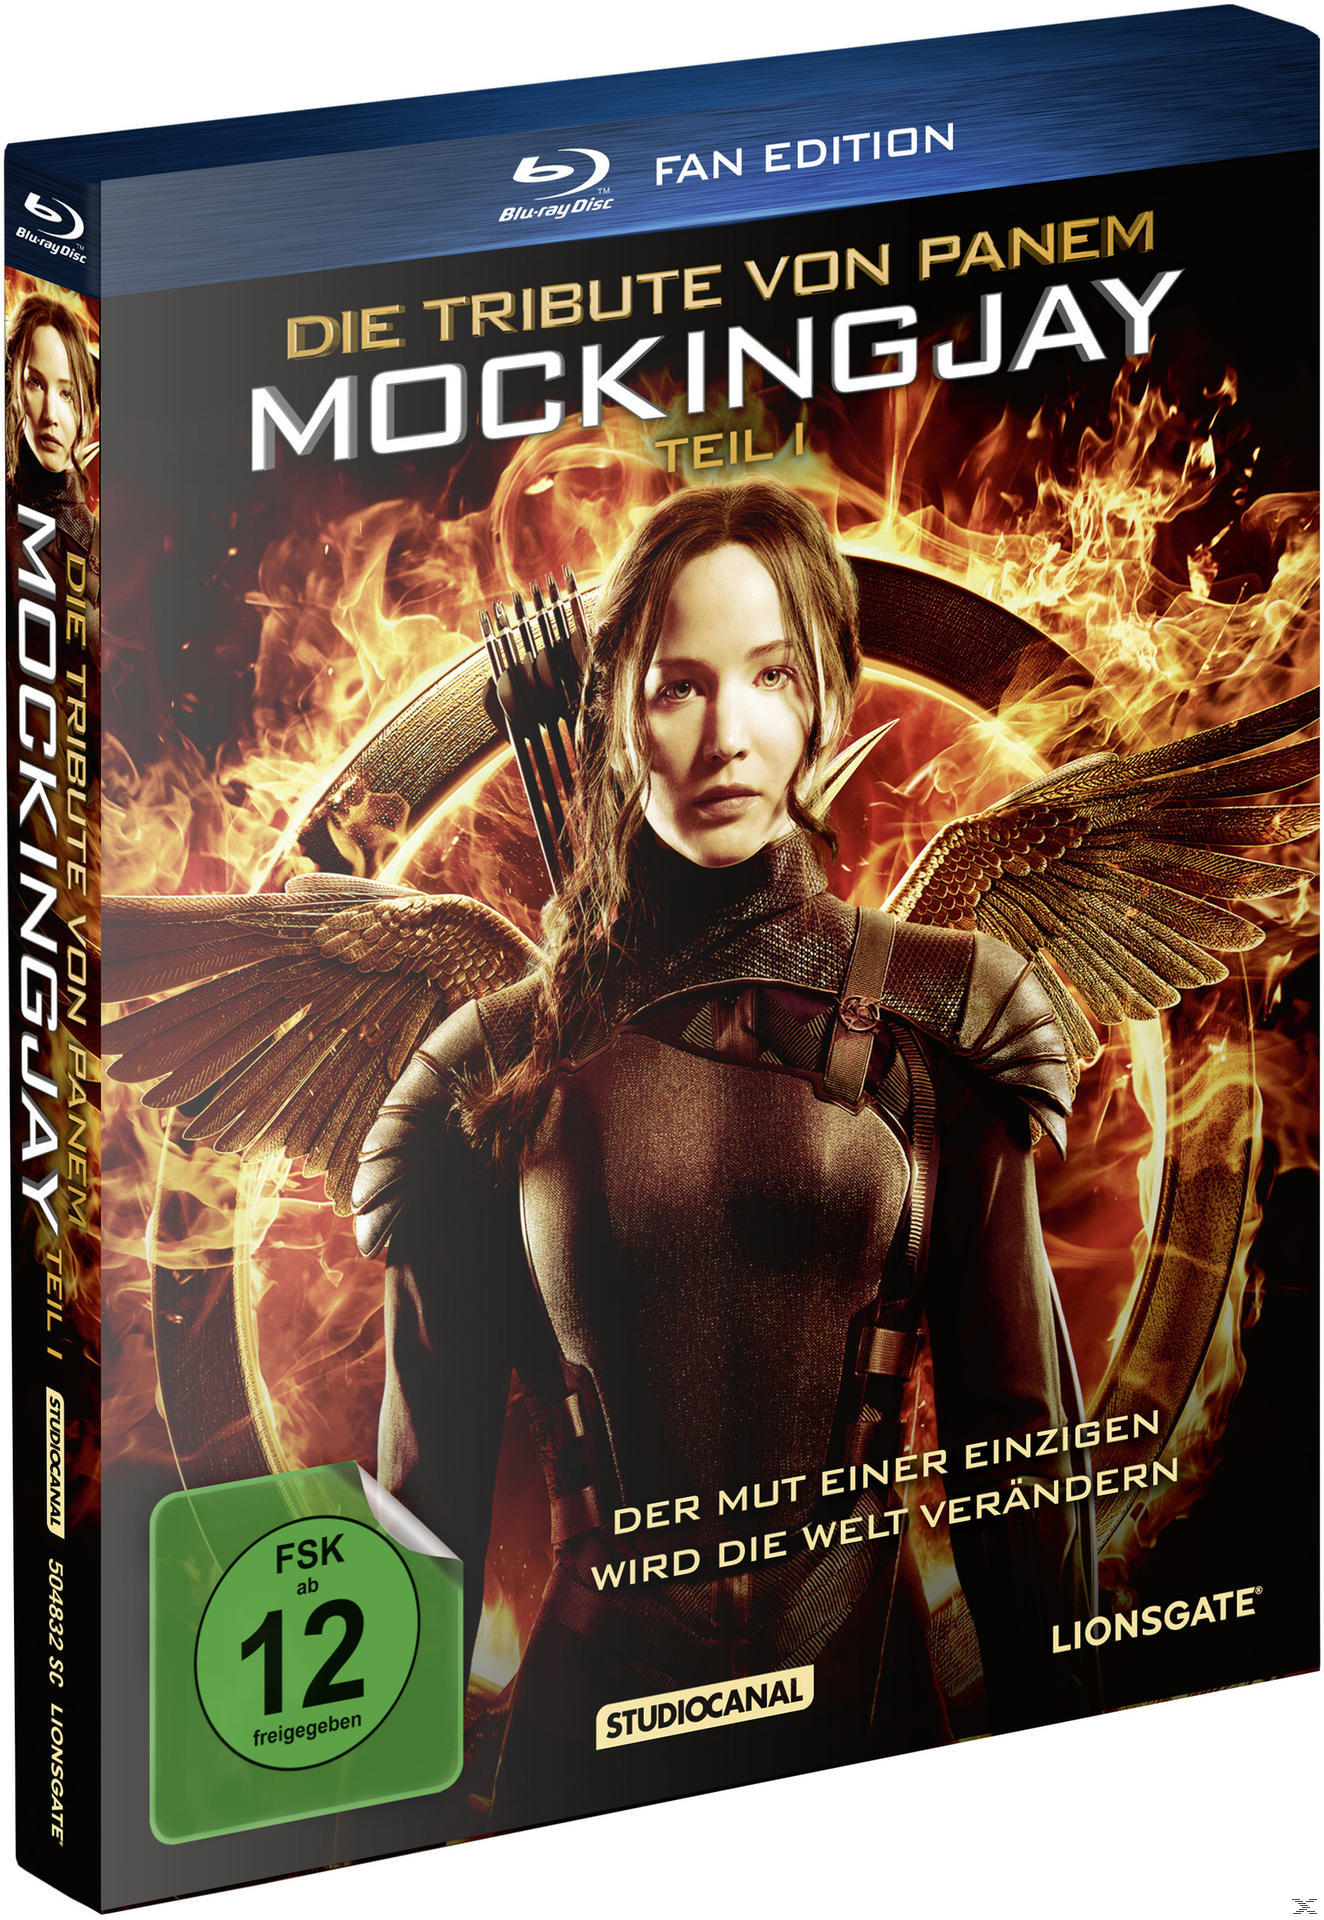 Mockingjay Edition) Tribute Panem Blu-ray von - Teil Die 1 (Fan